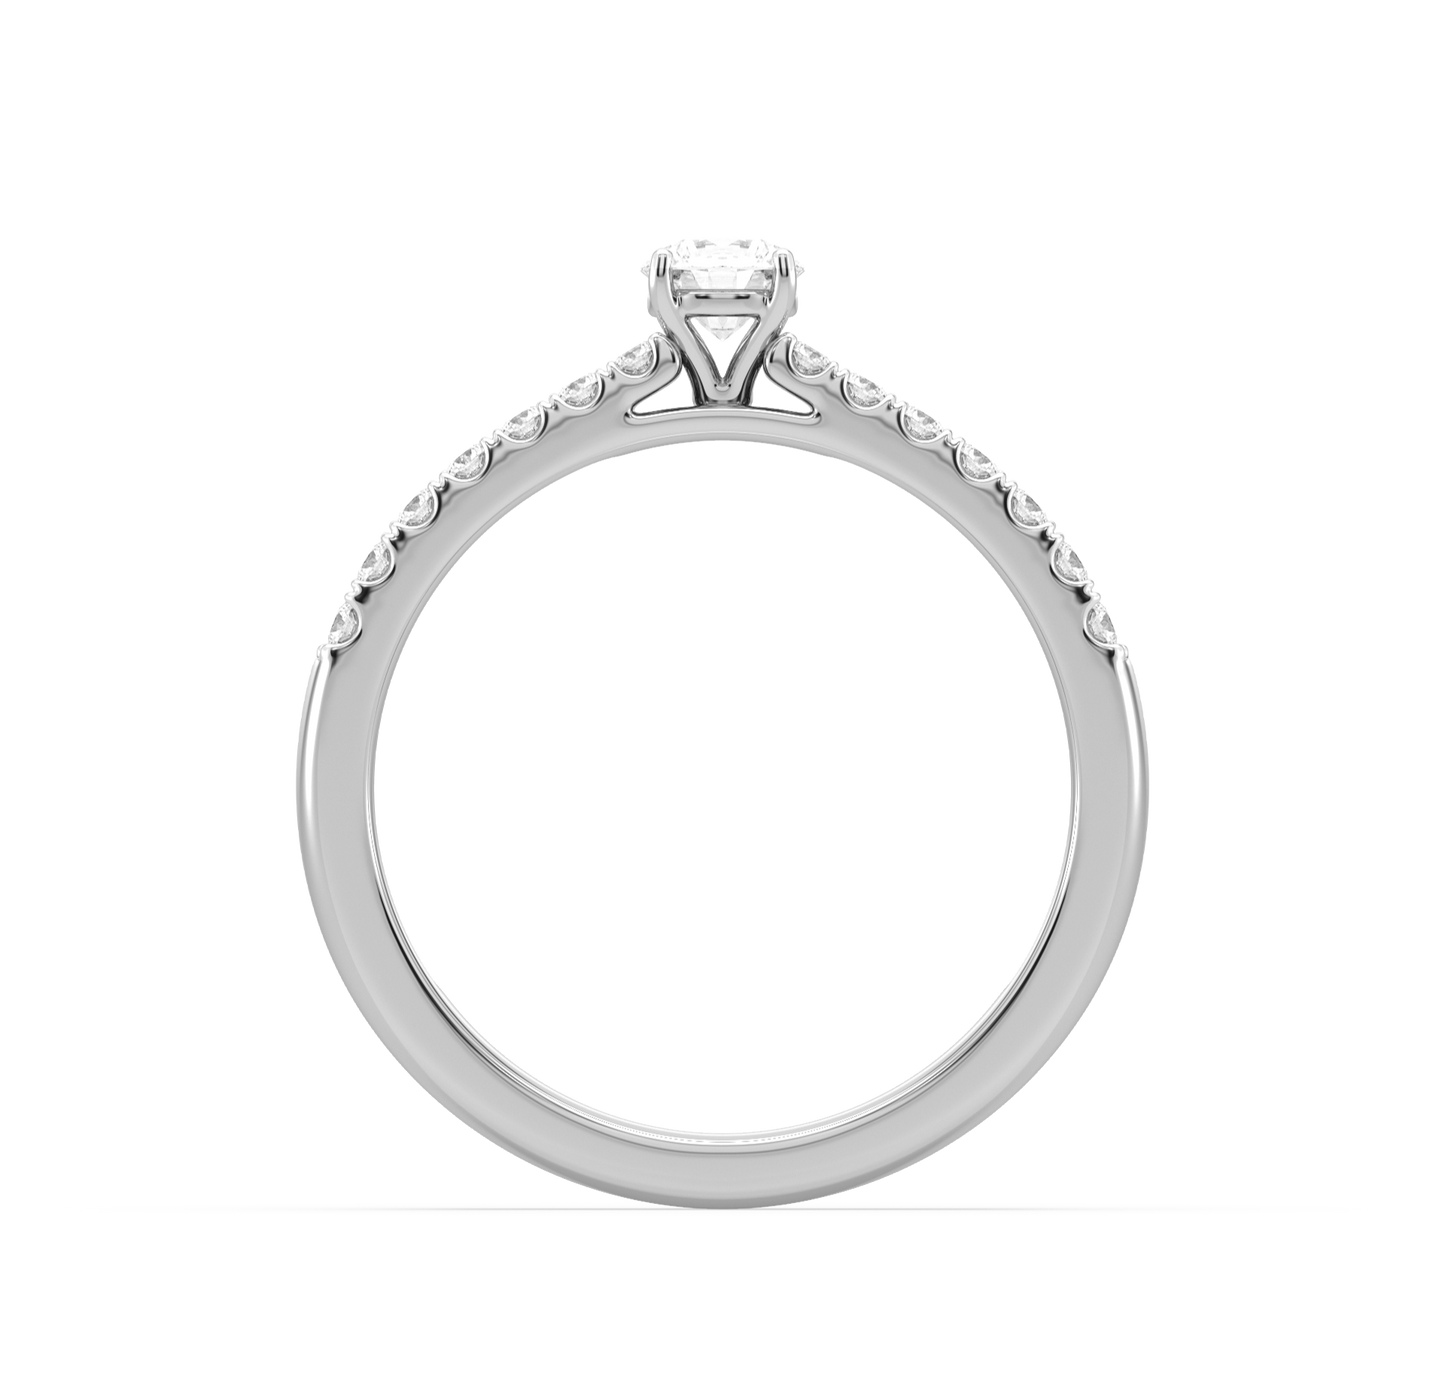 Customised ring RG21010-PH21043